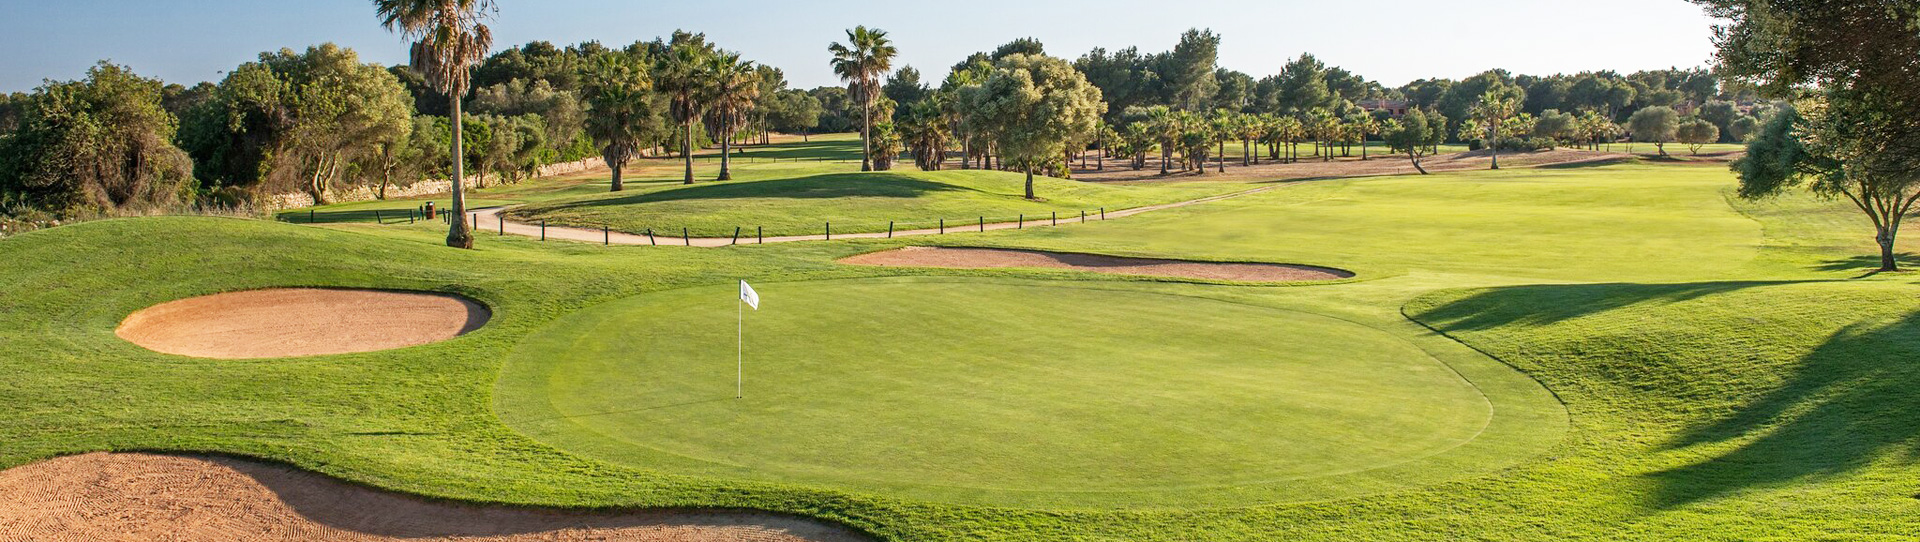 Spain golf courses - Son Antem Golf Course East - Photo 1